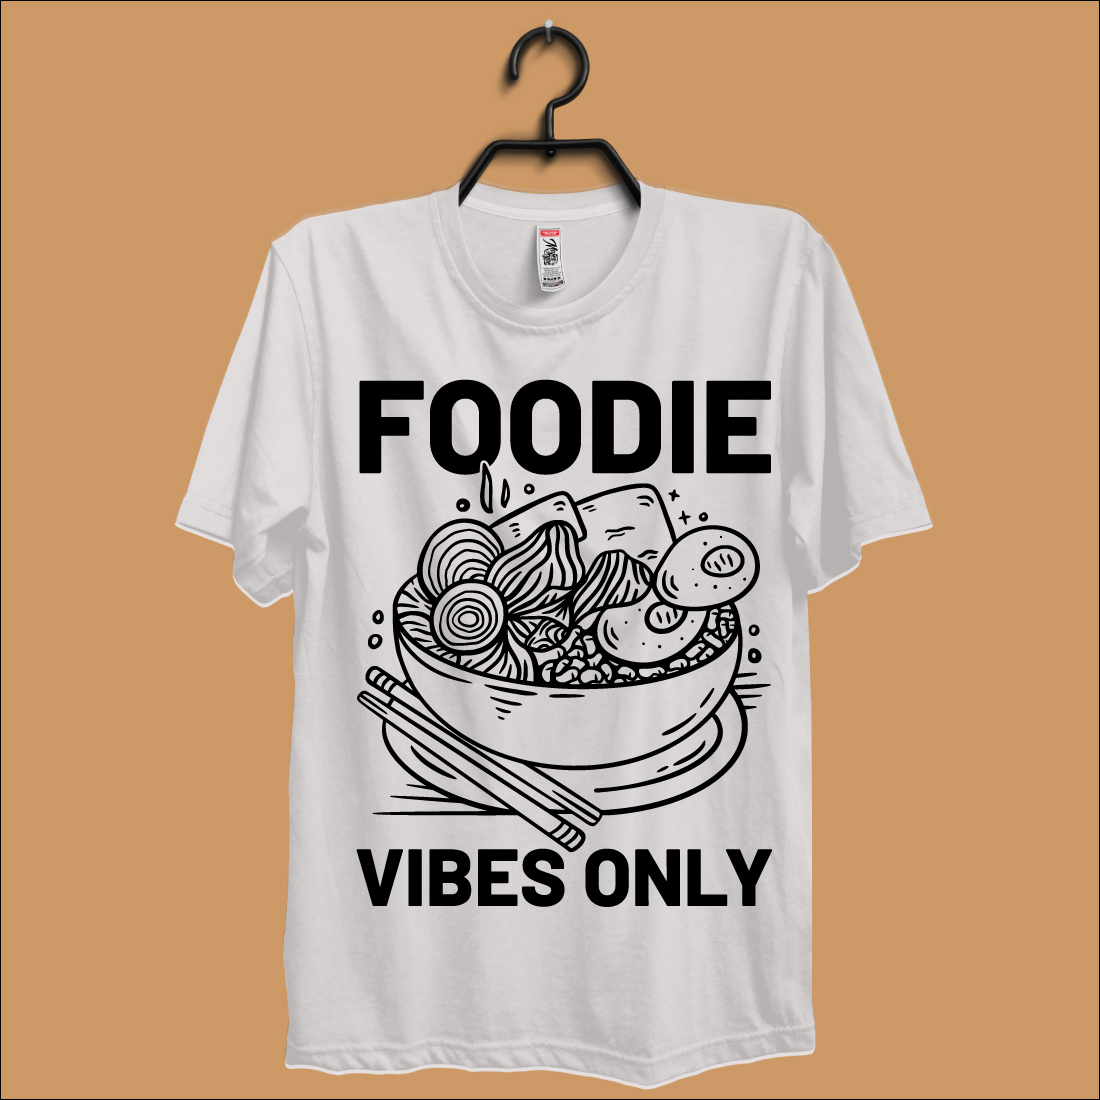 food t shirt design01 870